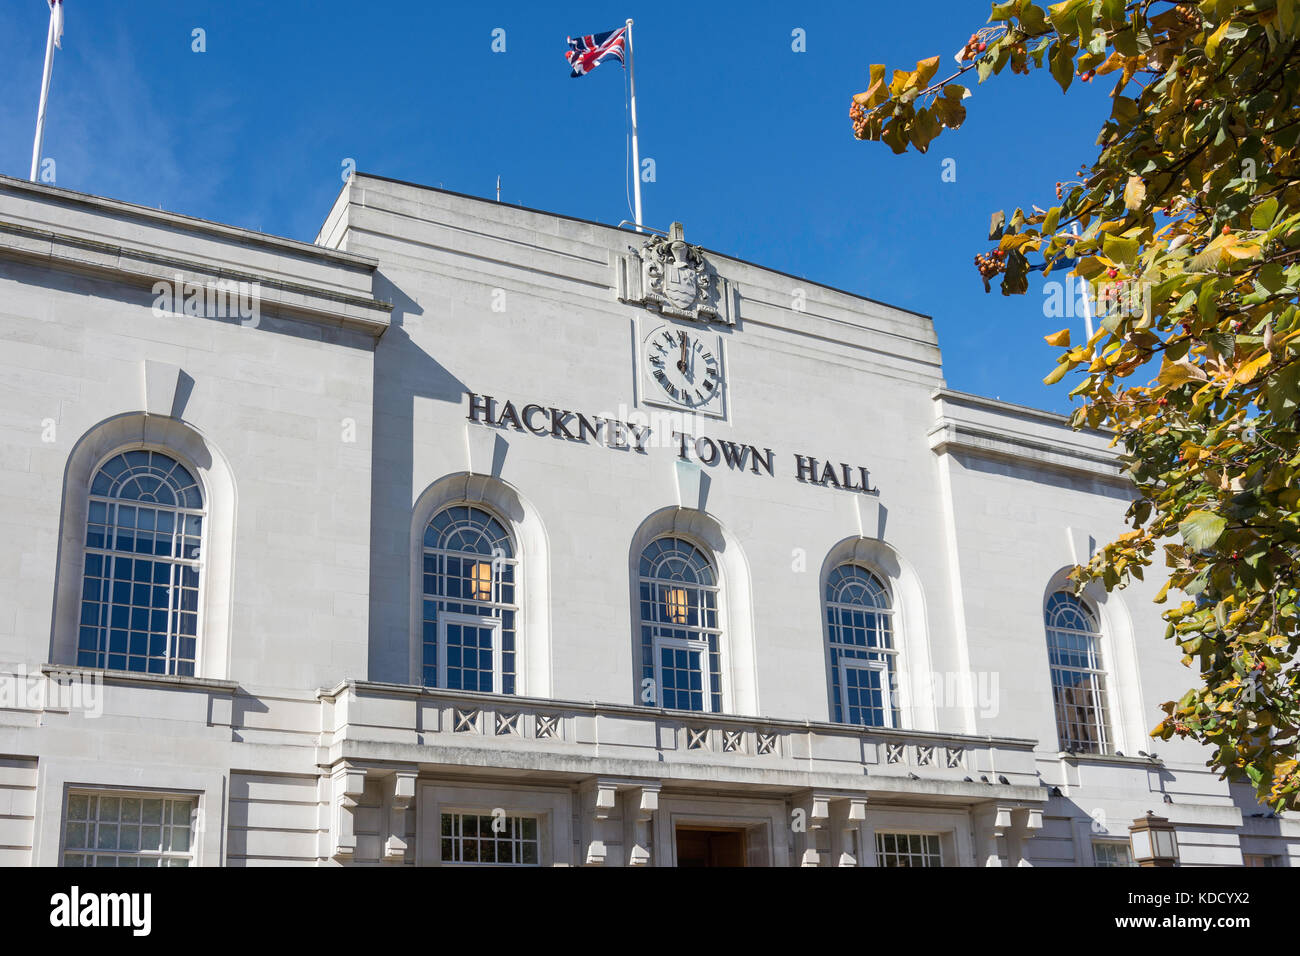 Hackney Town Hall, Mare Street, Hackney Central London Borough of Hackney, Greater London, England, Regno Unito Foto Stock